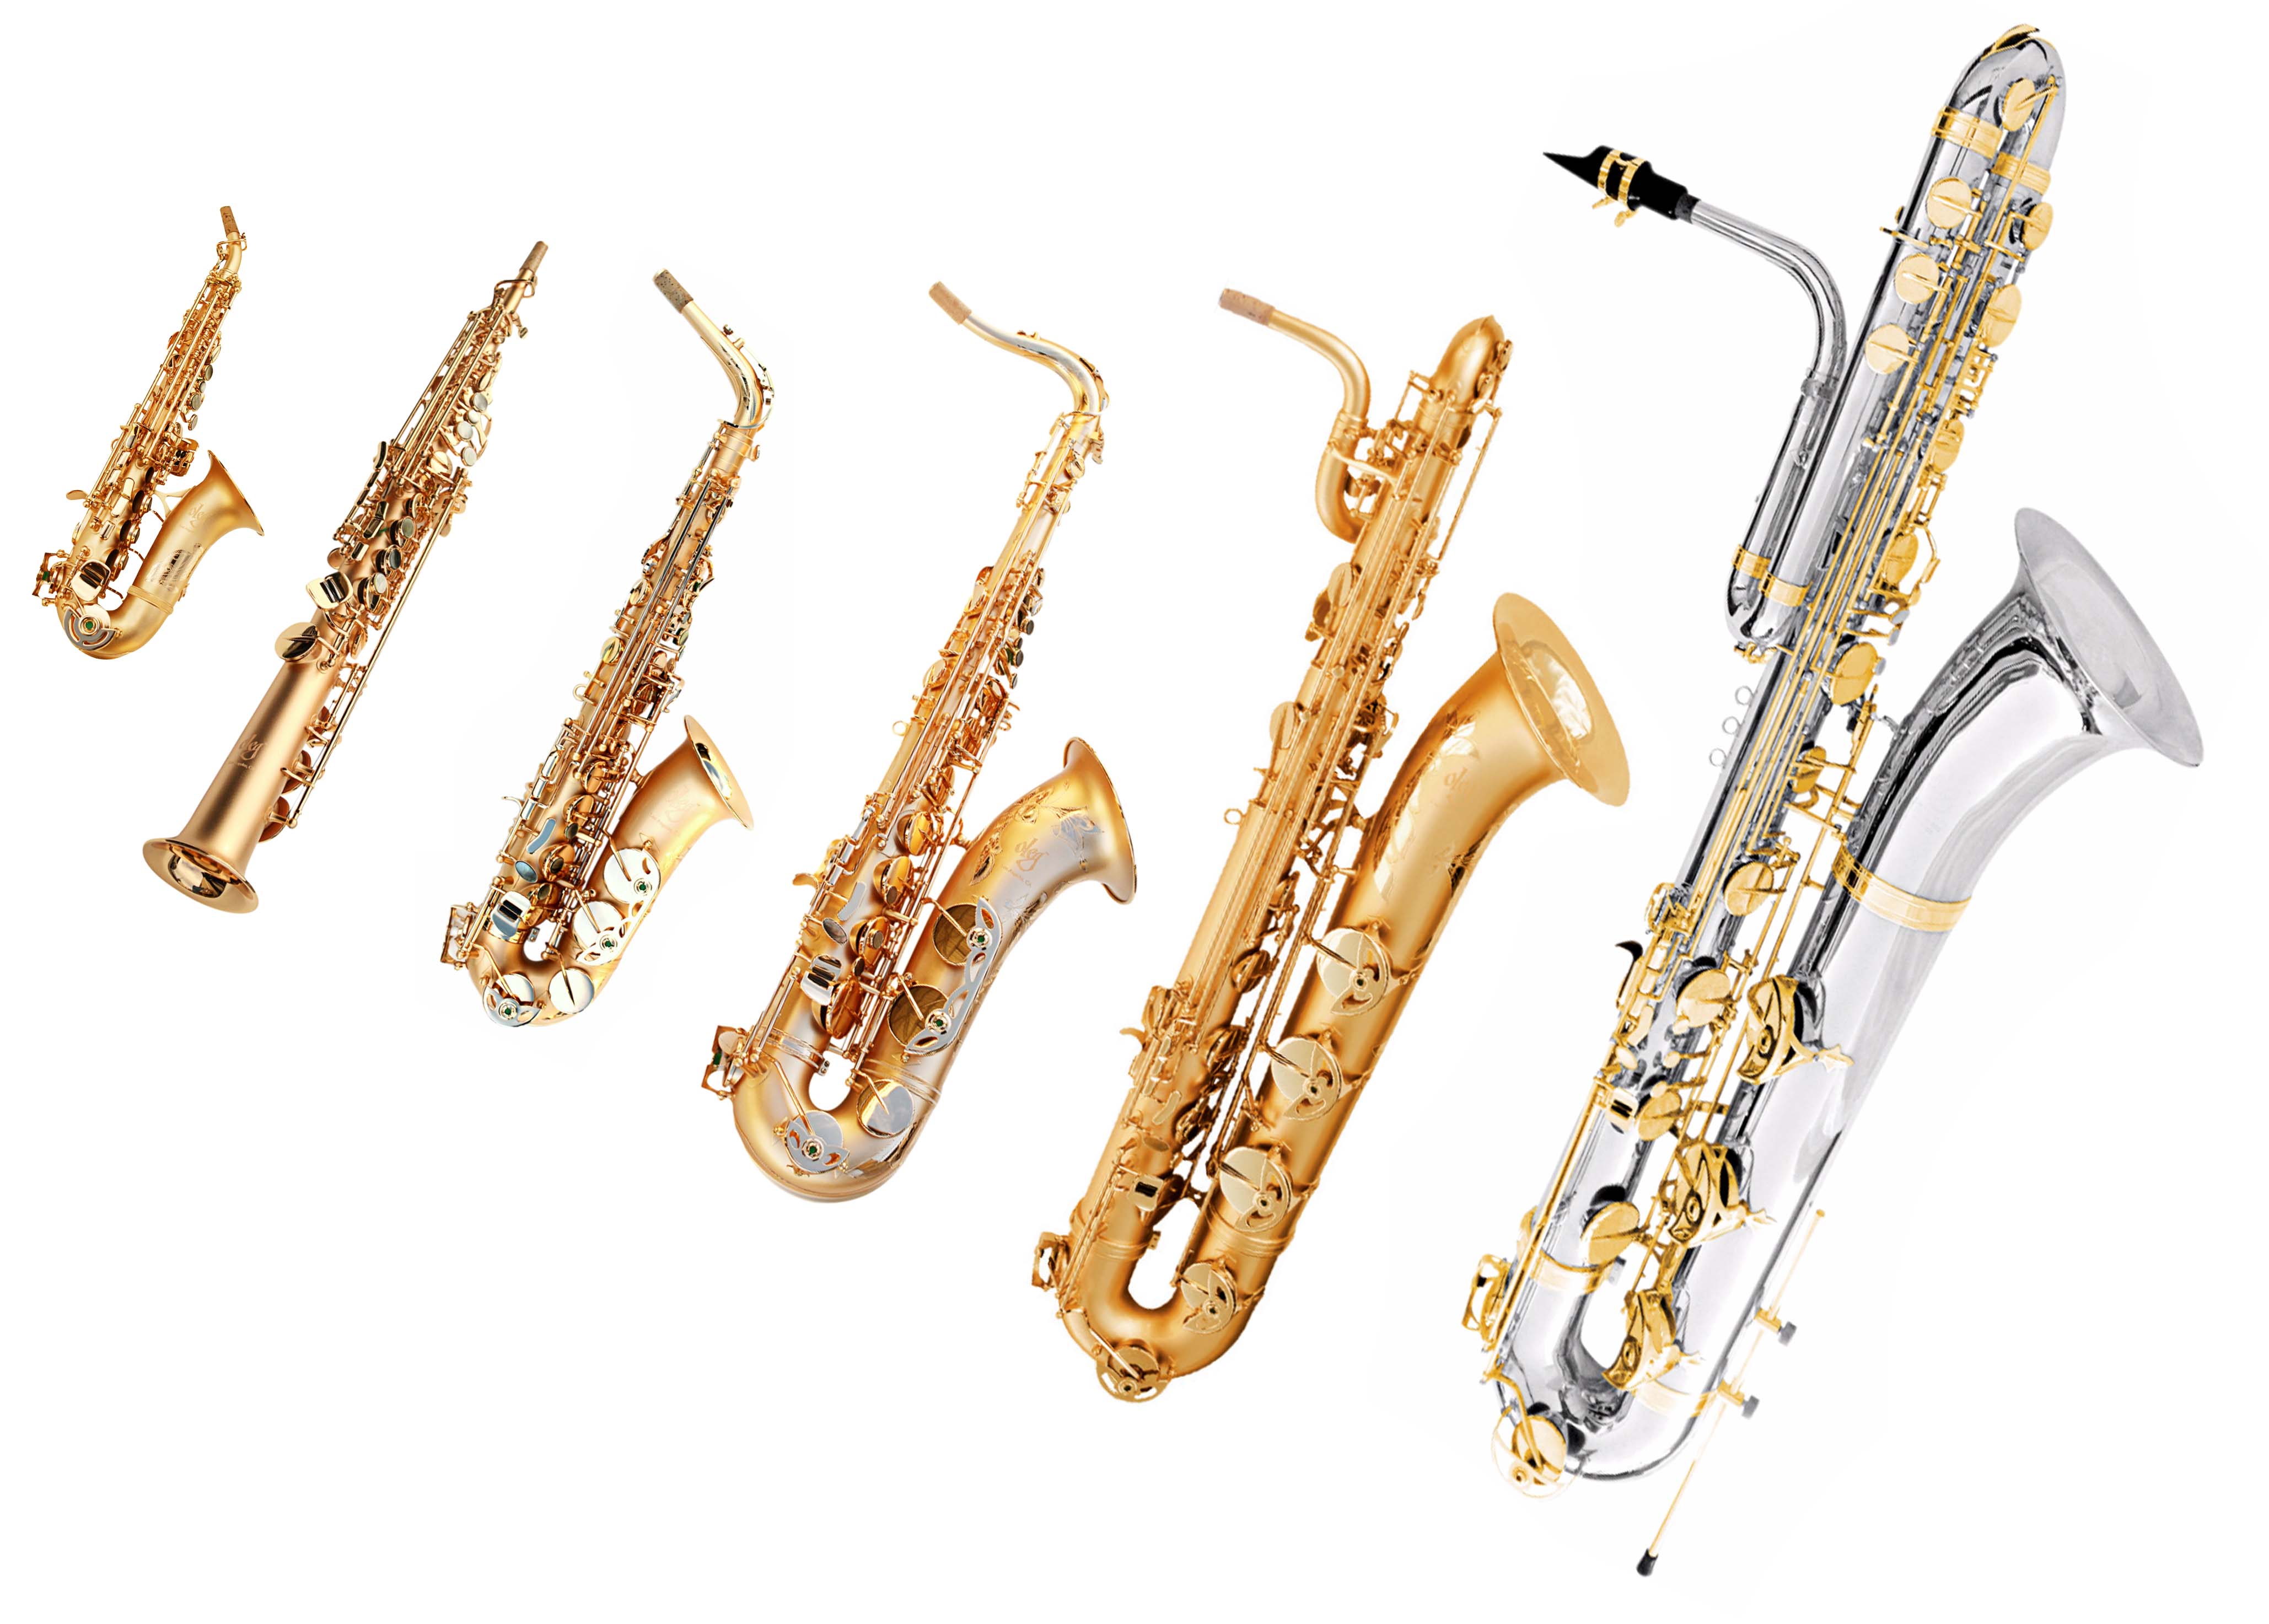 saxofoons | ReparatieAtelier